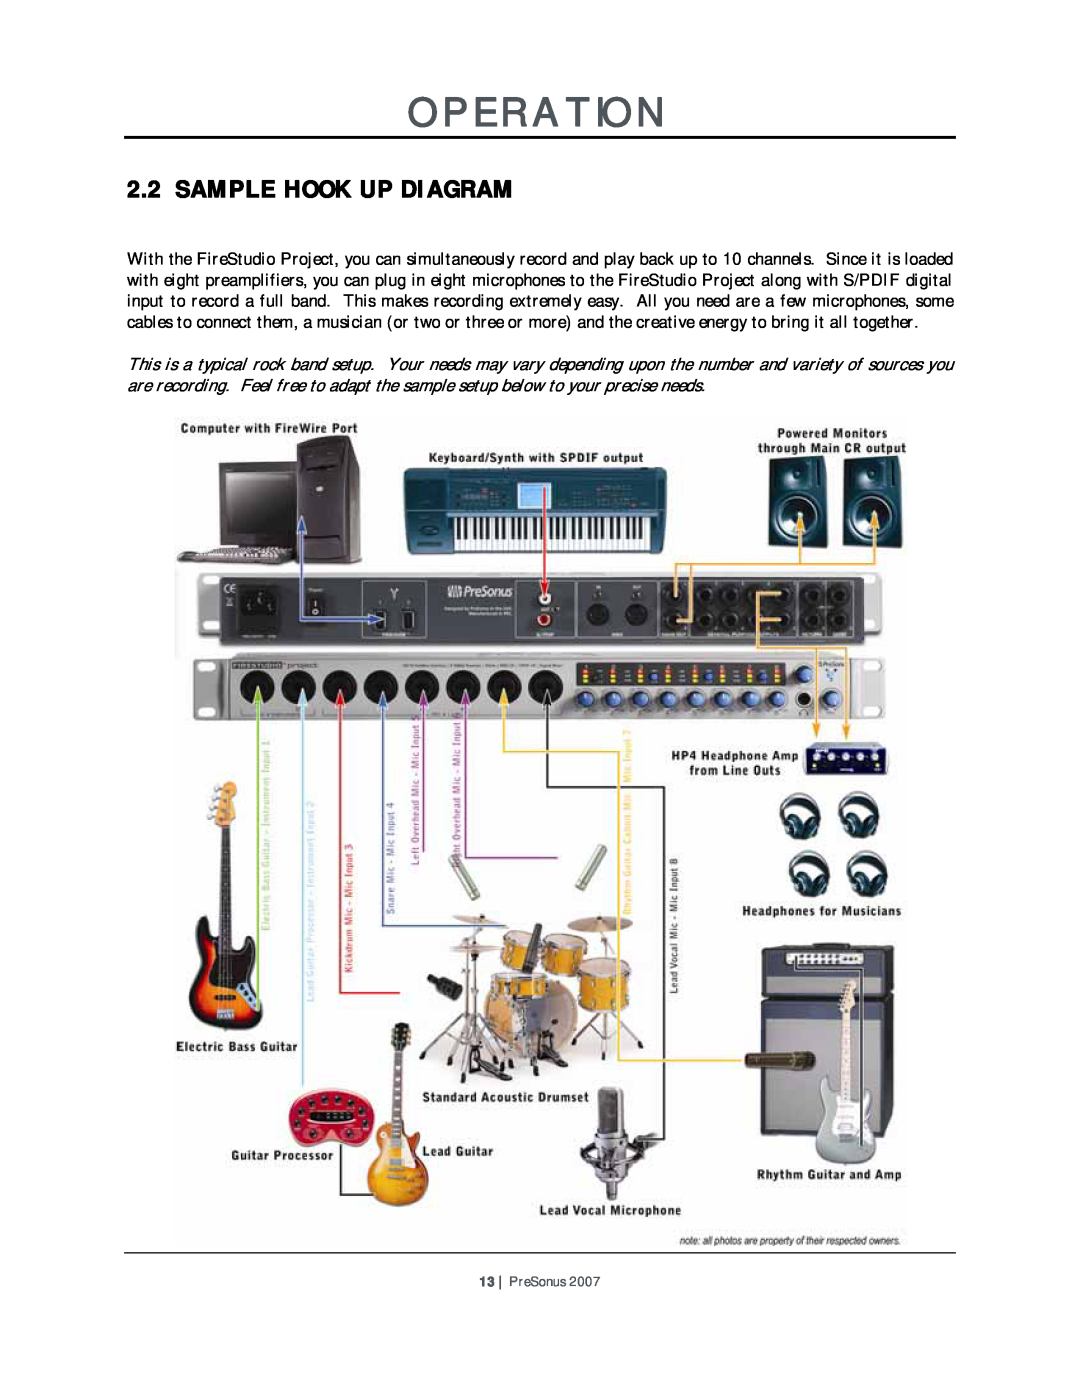 Presonus Audio electronic Microphone Preamplifier user manual Sample Hook Up Diagram, Operation, PreSonus 